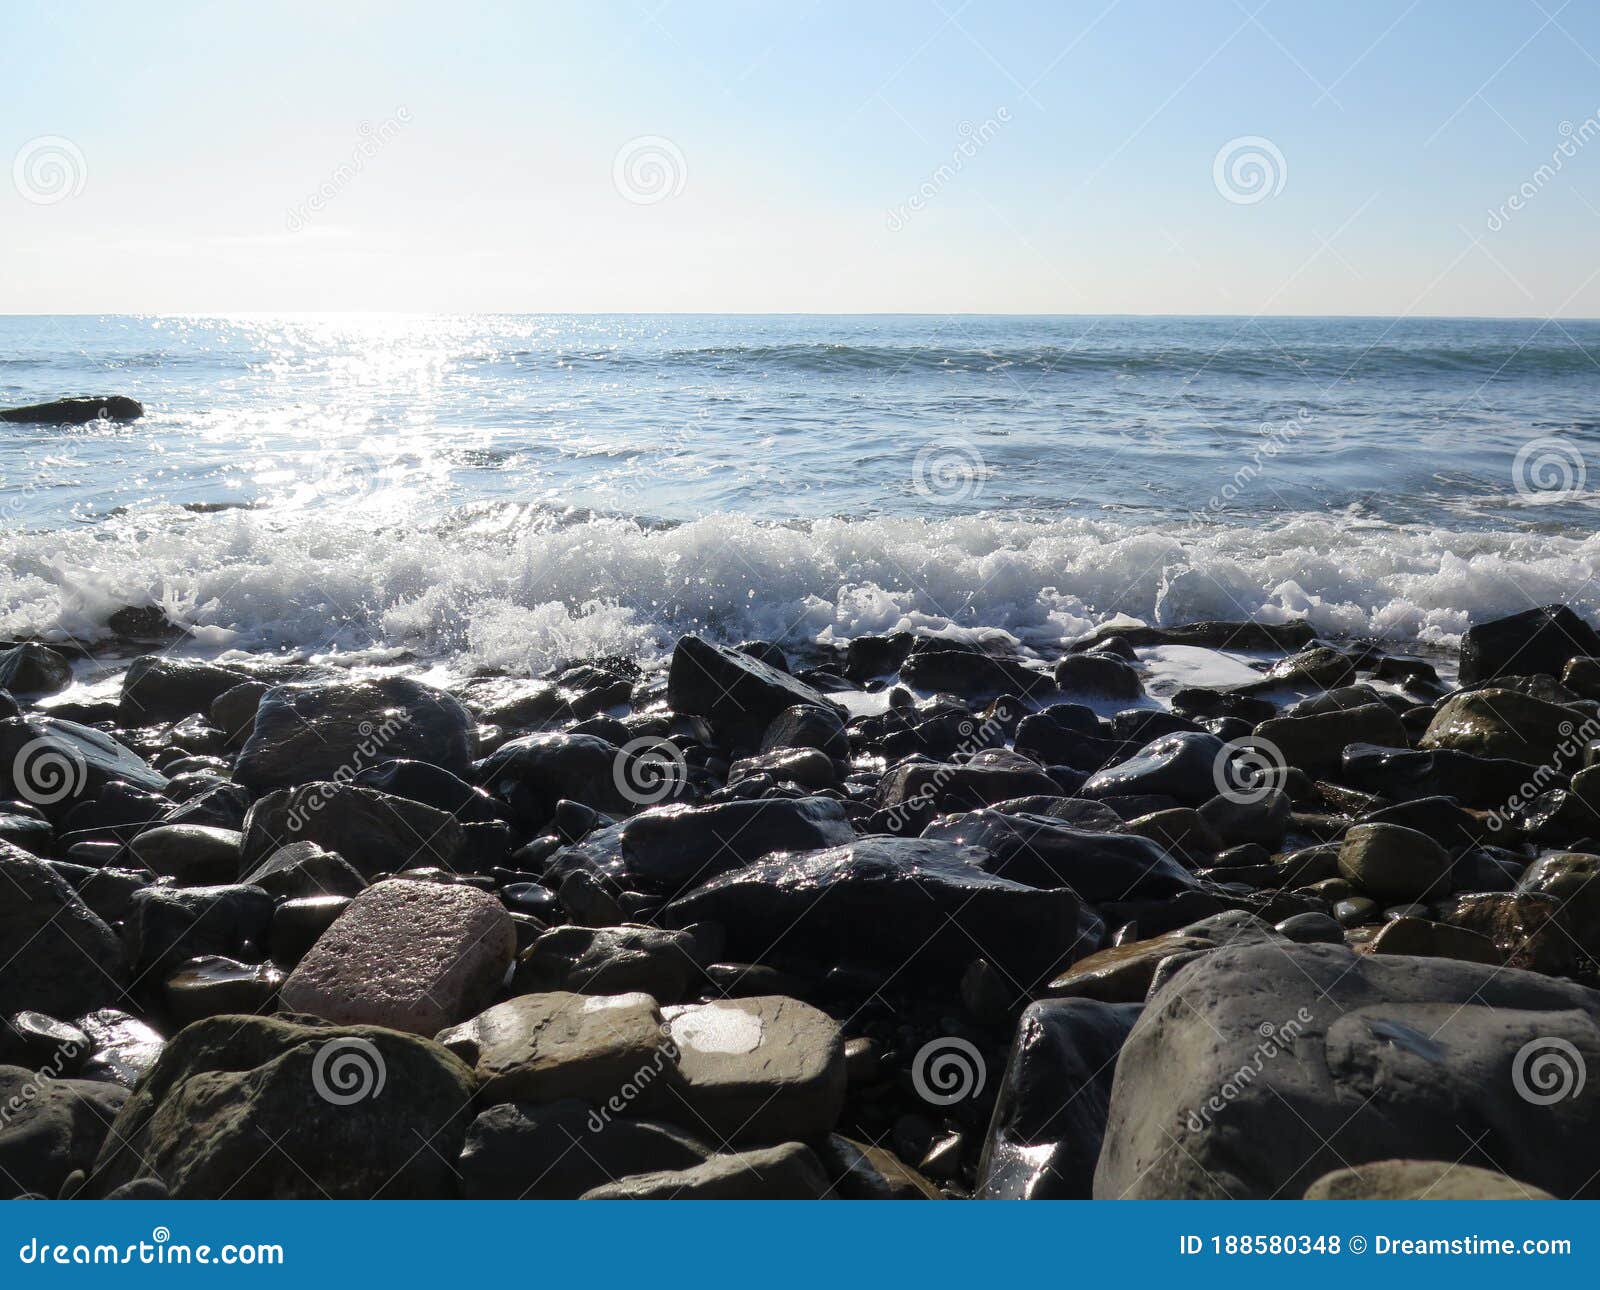 Waves crashing on rocks stock photo. Image of water - 188580348